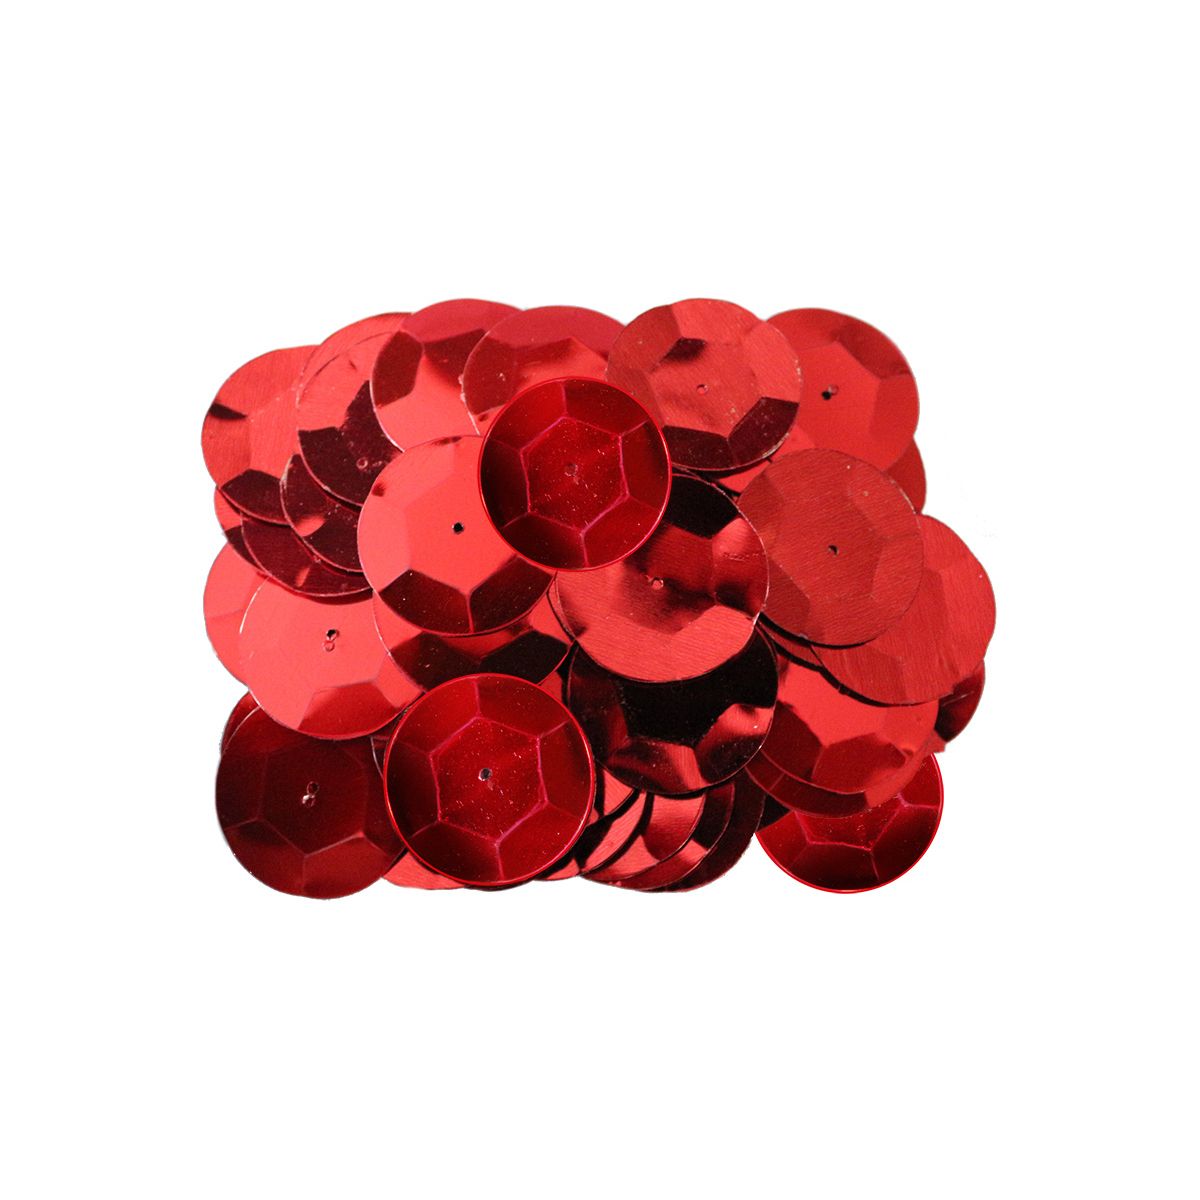 Konfetti Titanum Craft-Fun Series Okrąłe czerwone